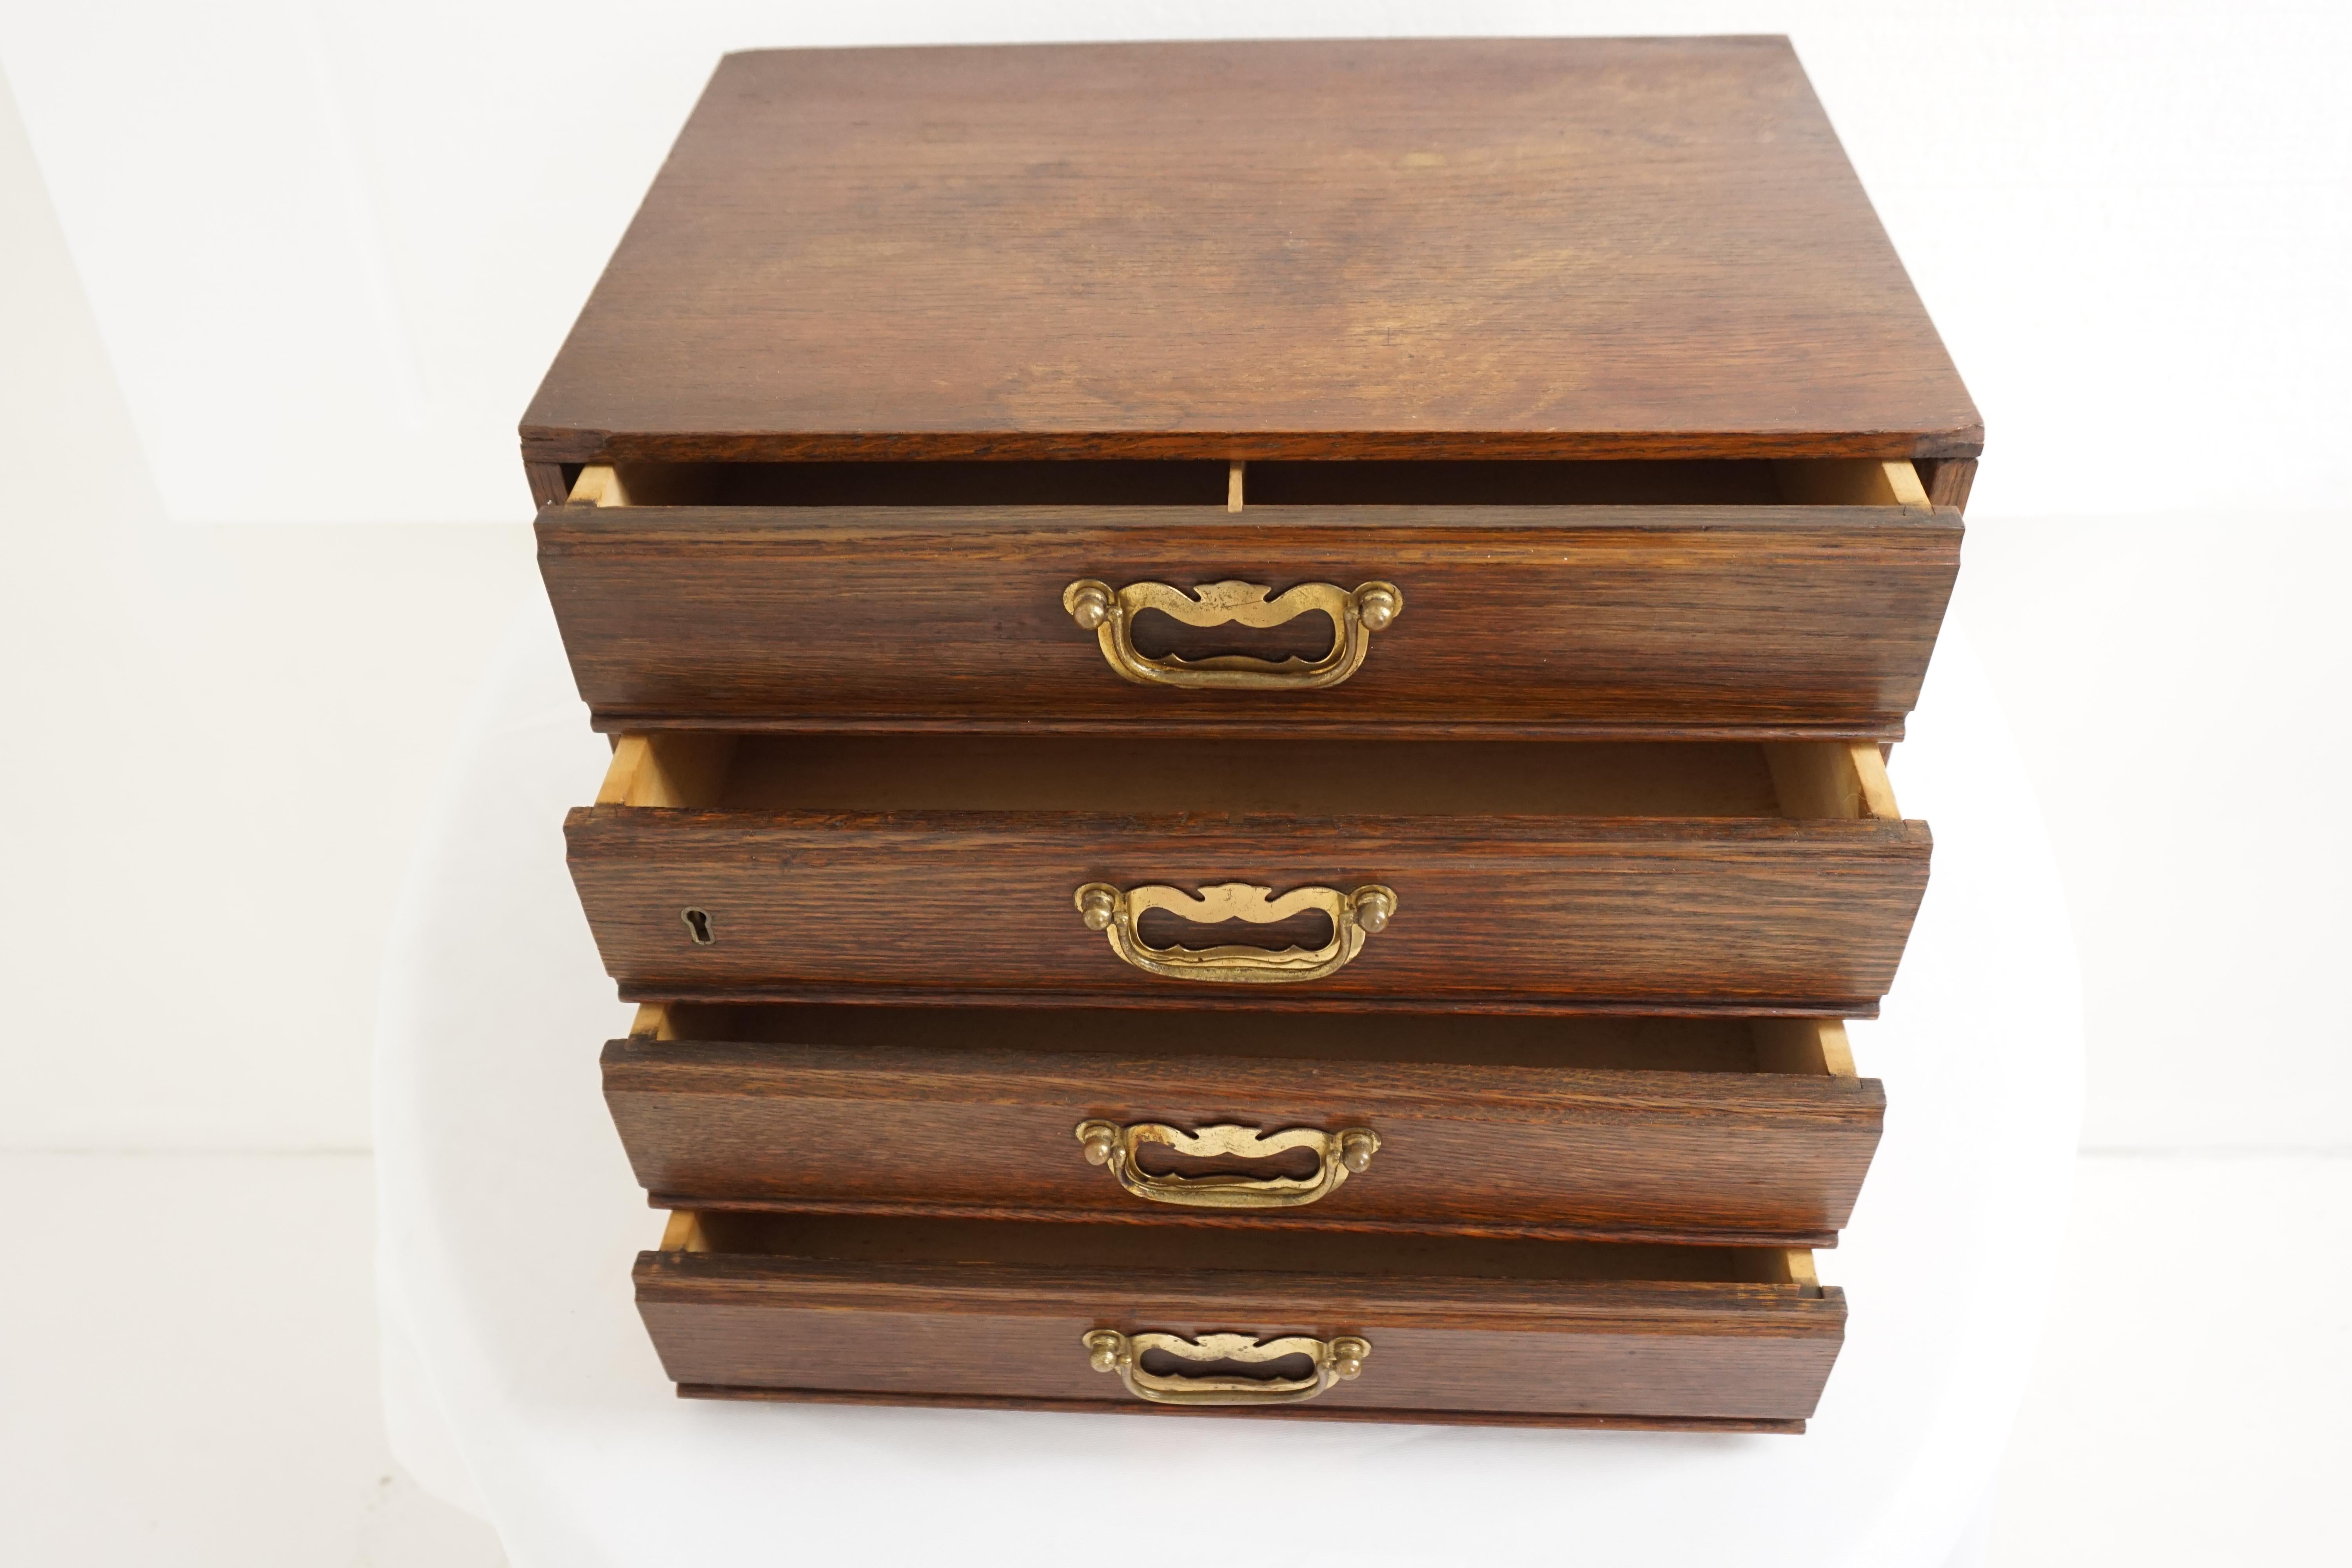 Antique tabletop 4-drawer file cabinet, Scotland, 1910

Scotland, 1910
Solid oak
Original finish
Rectangular top
Below are four drawers
Original brass hardware
Nice condition
Rich patina

$275

B1893

Measures: 15.5